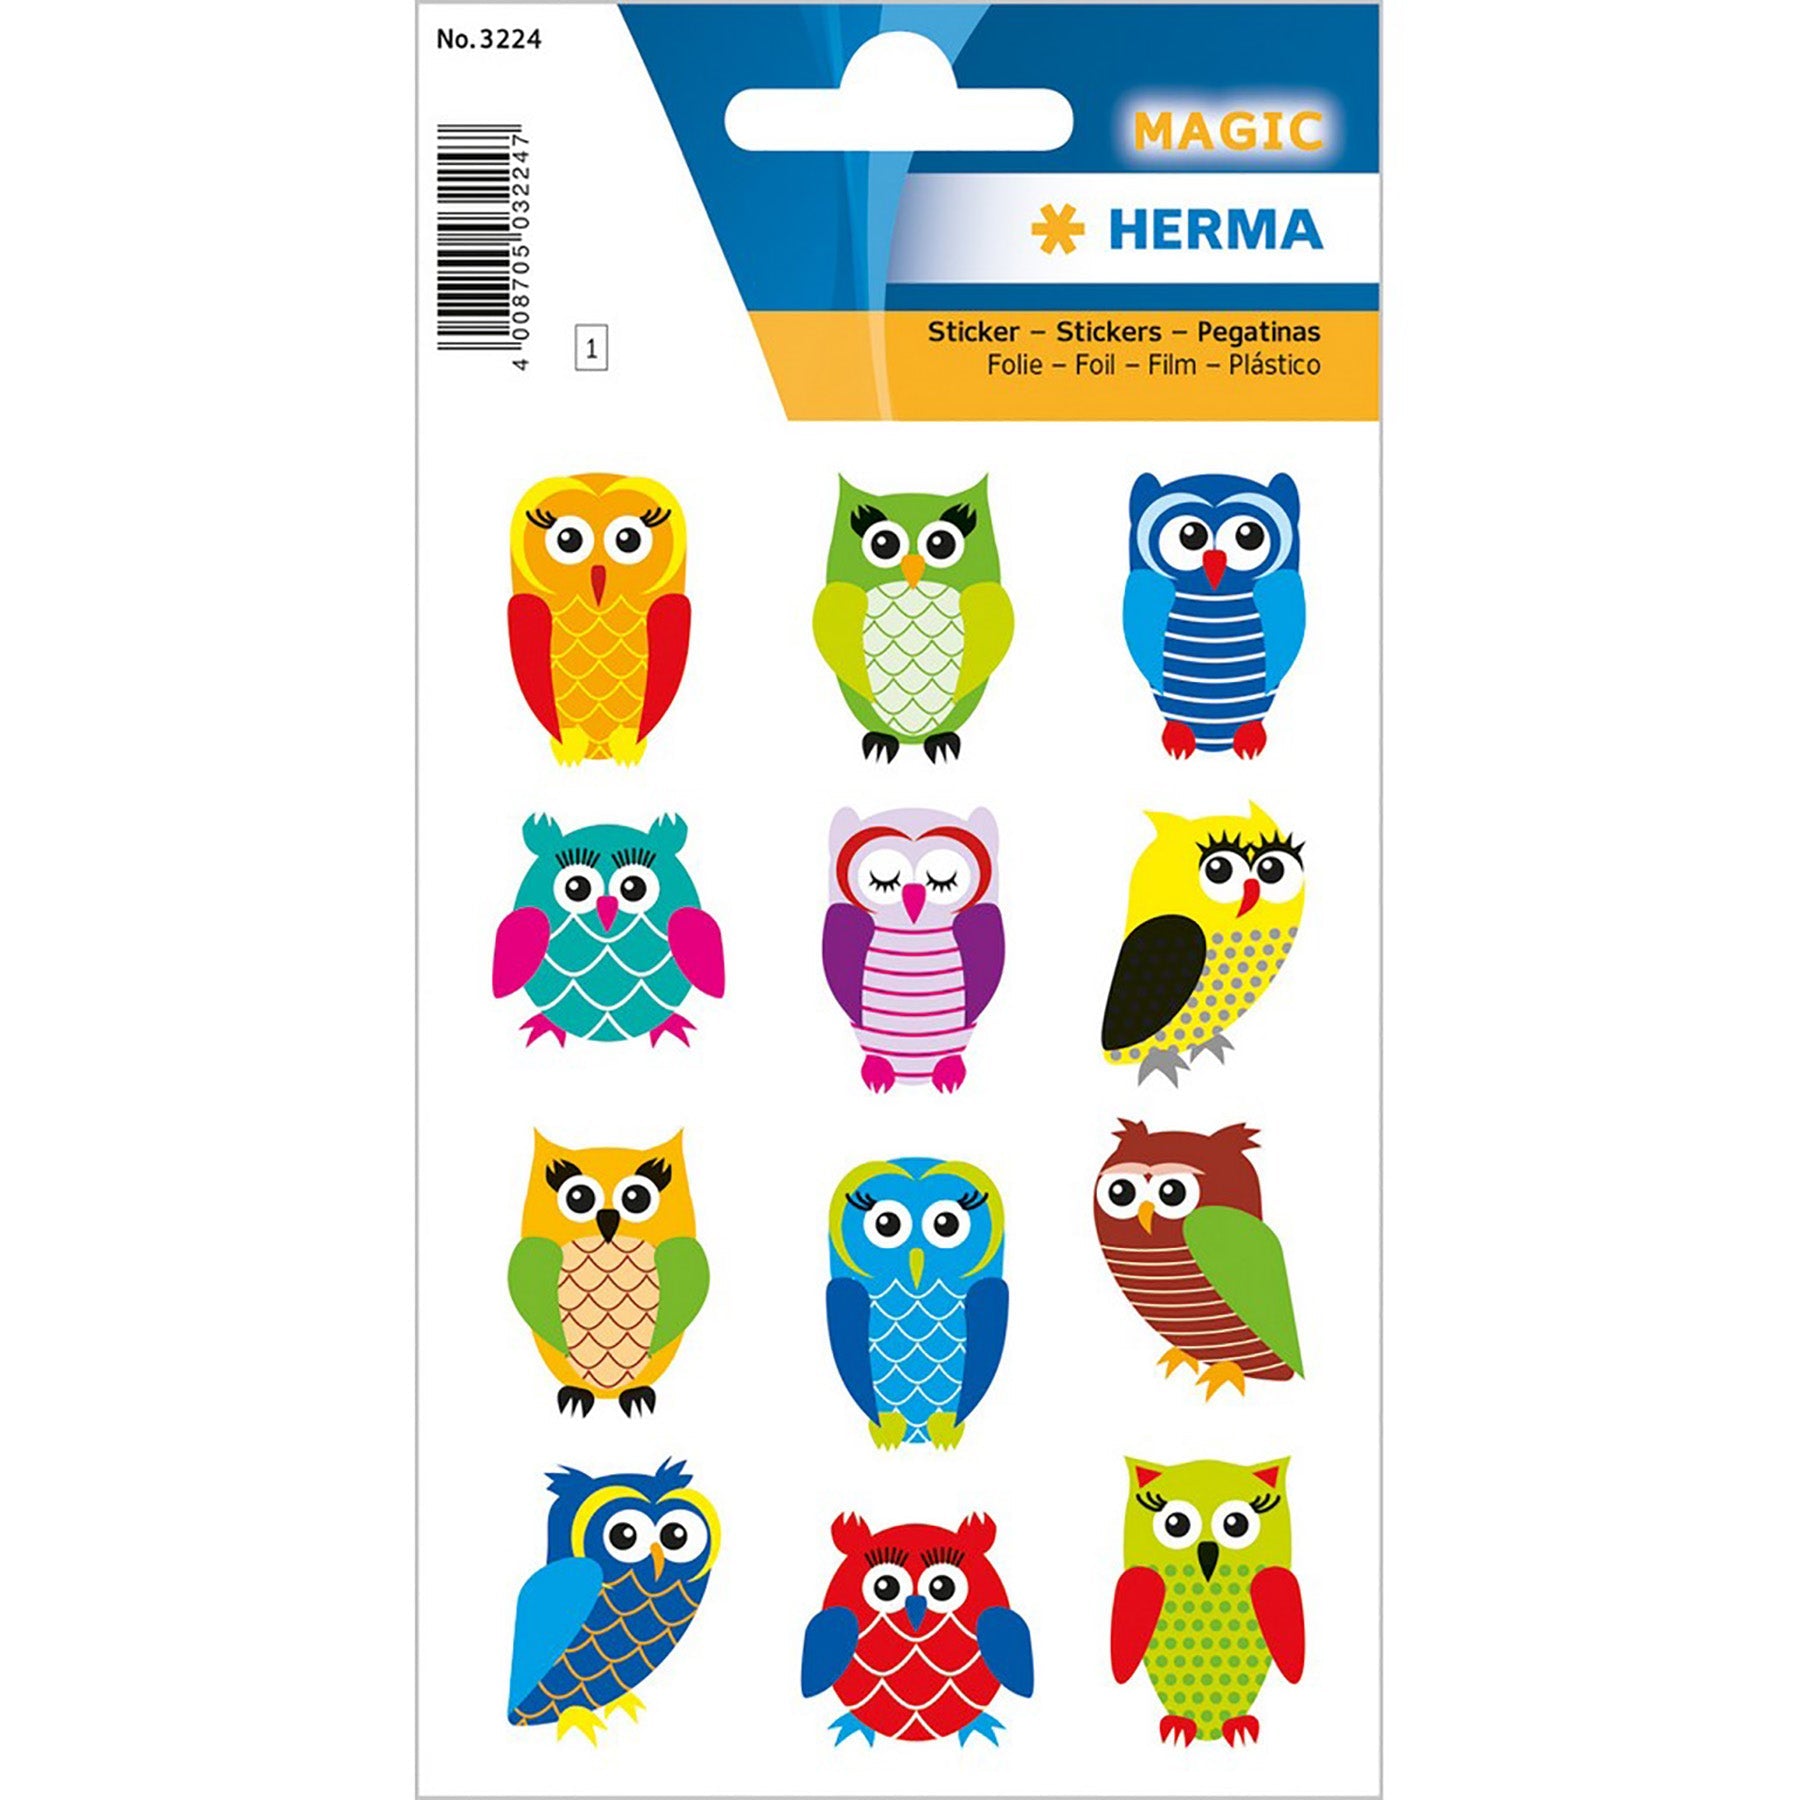 Herma Magic Stickers Owls Foil Glittery 4.75x3.1in Sheet